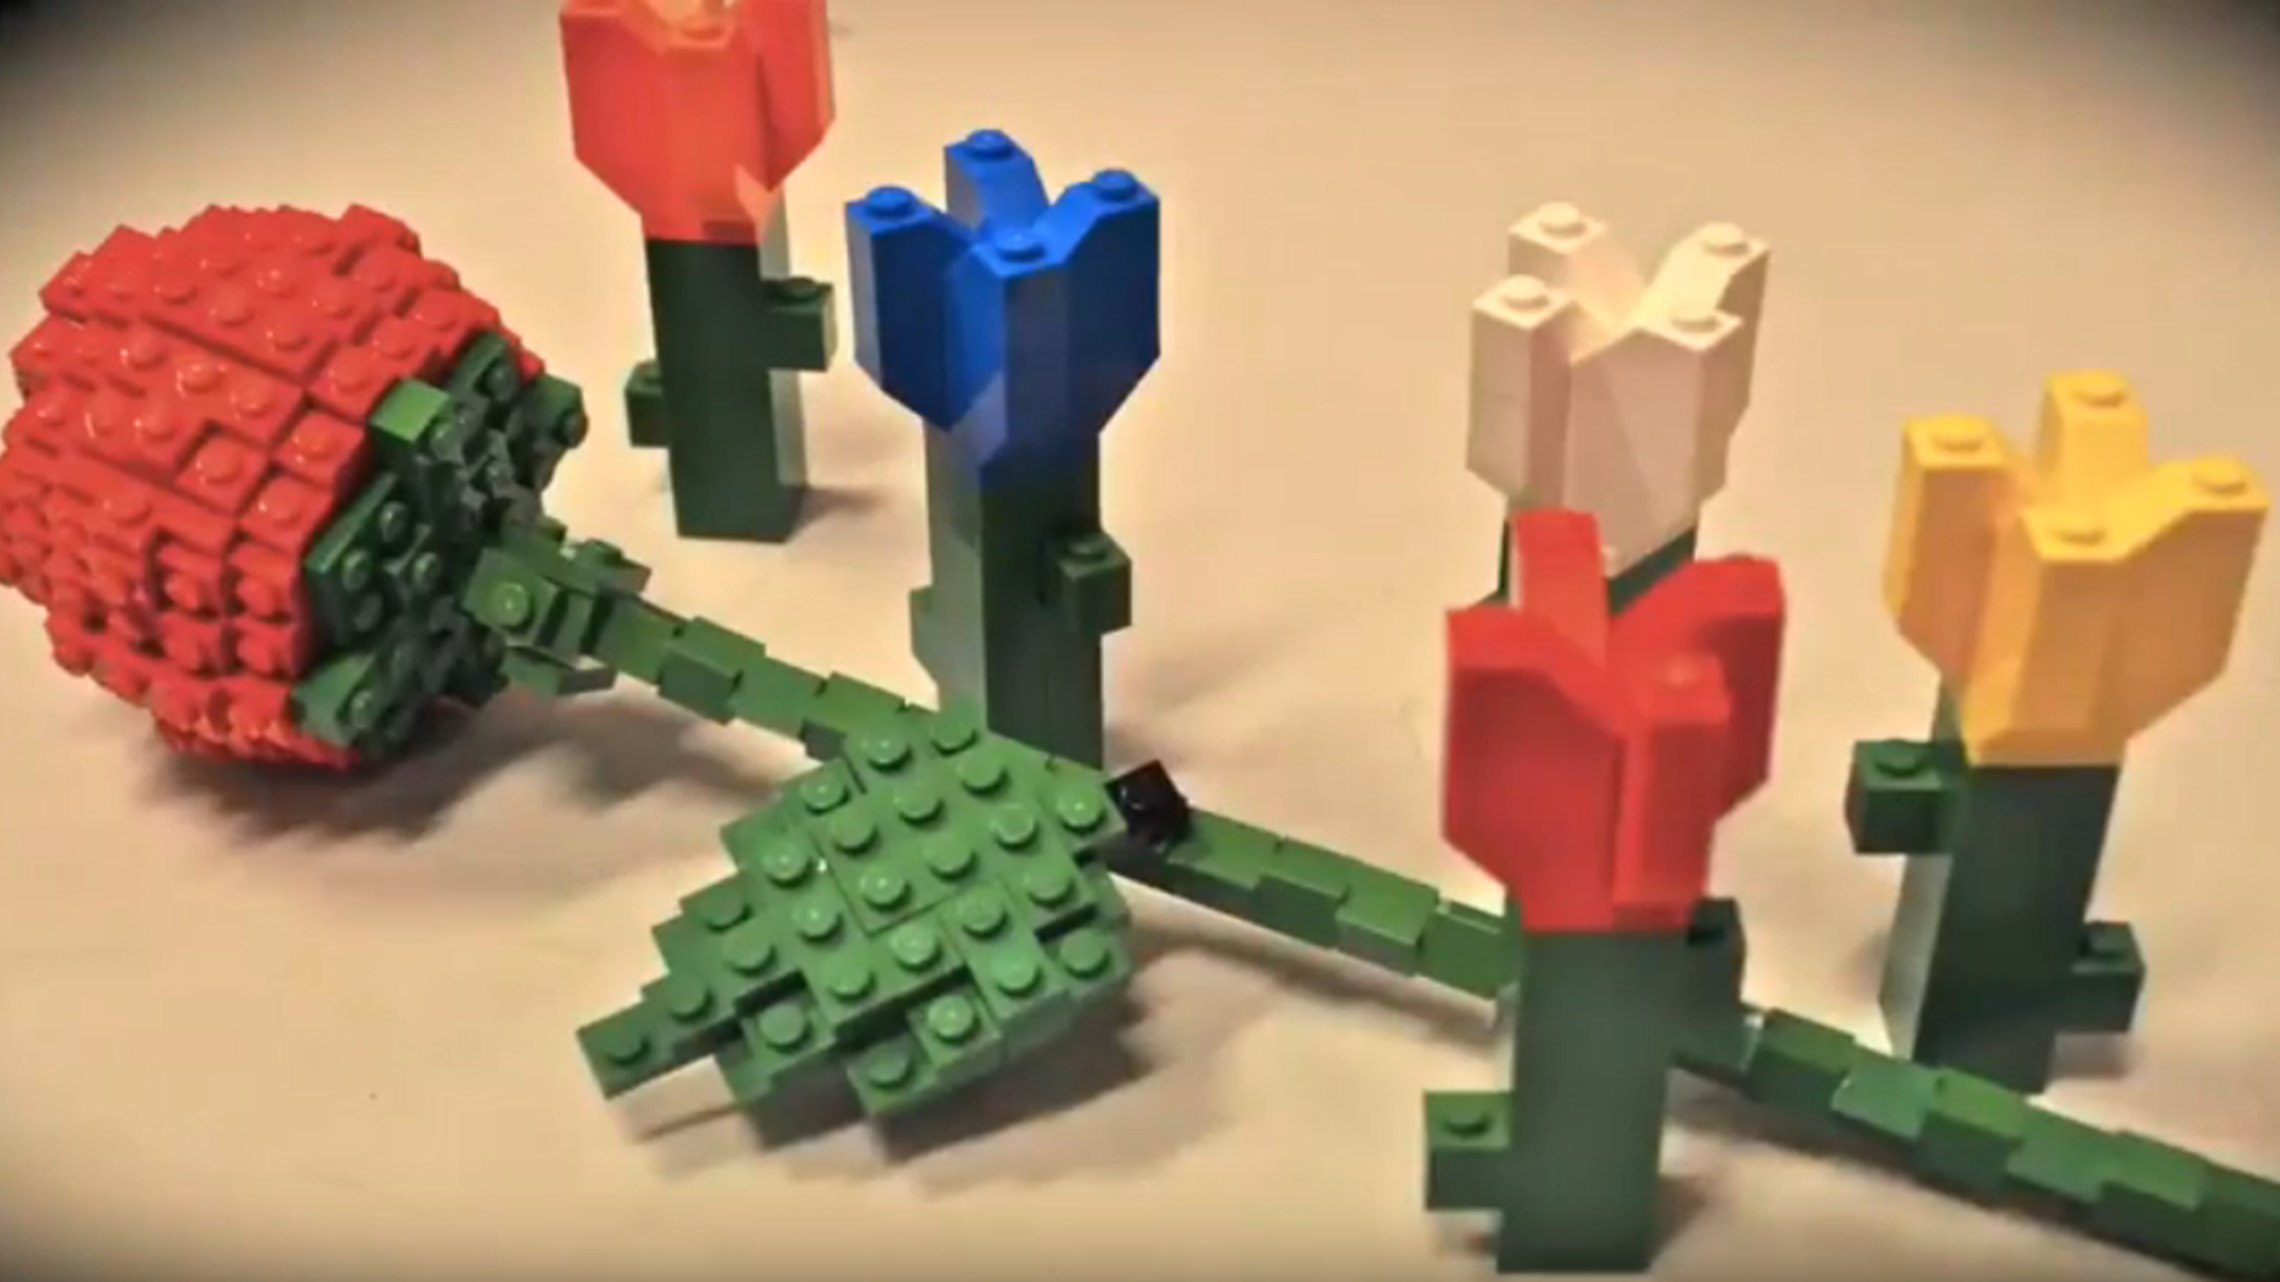 How To: Build A LEGO® Flower  LEGOLAND Discovery Center Westchester